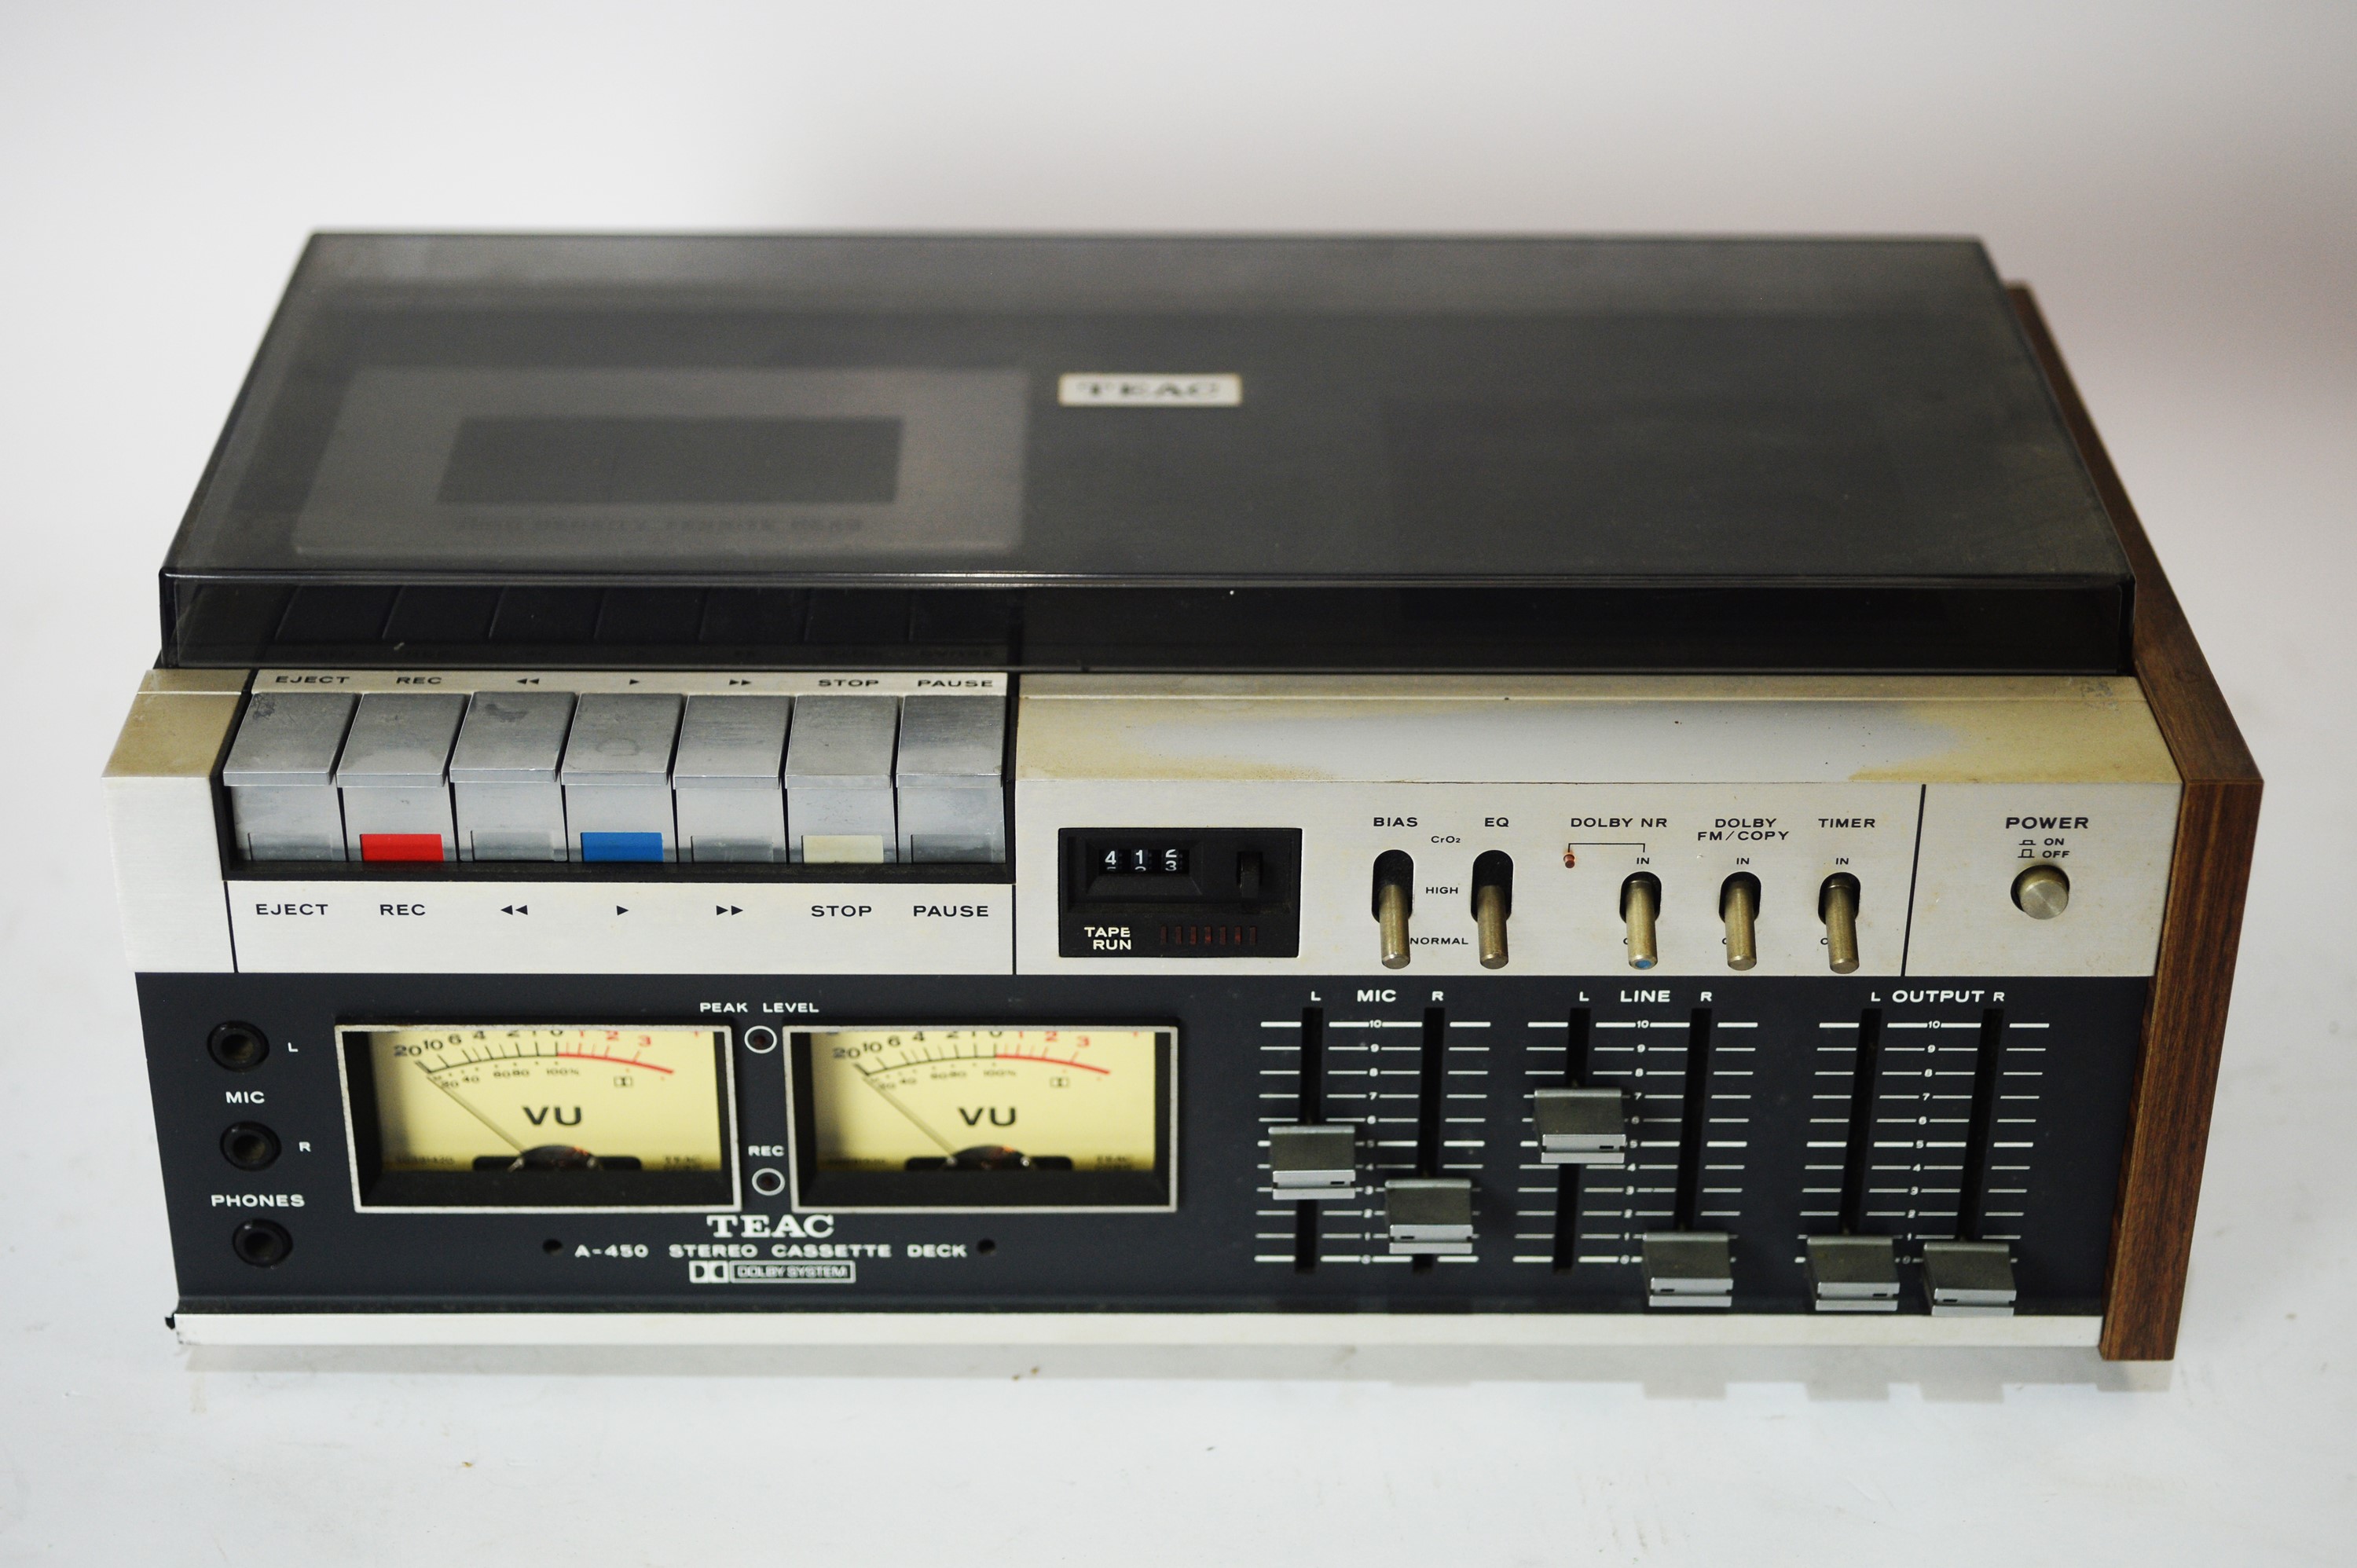 A Teac A 450 Stereo Cassette deck